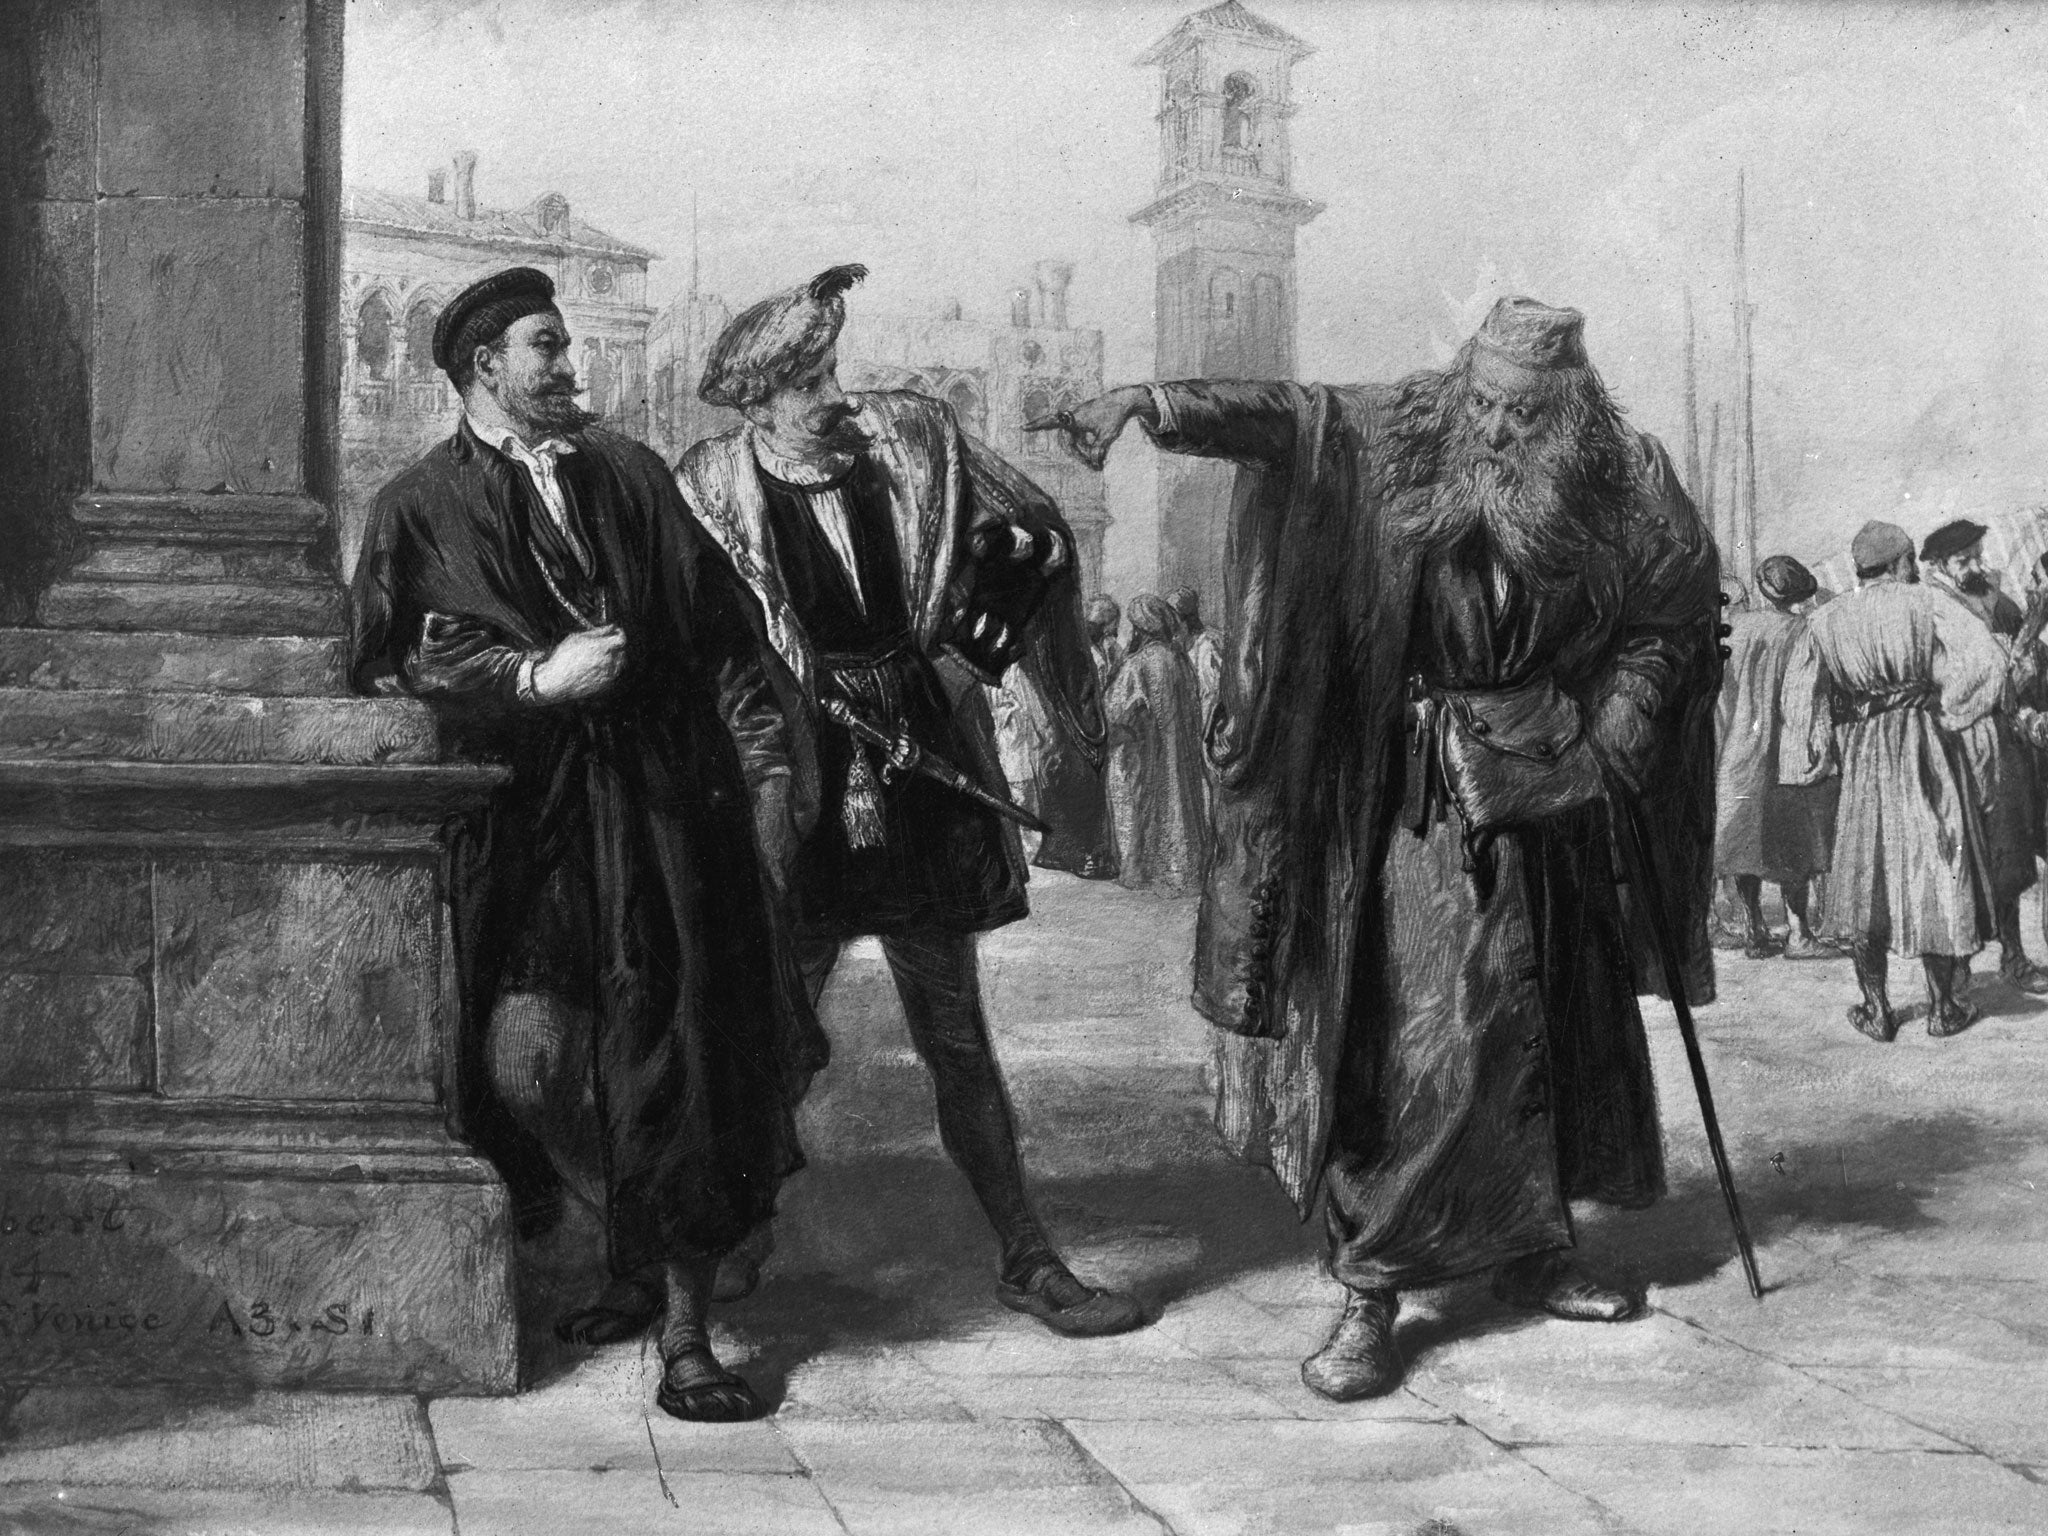 Shakespeare retold: Salanio and Salarino meet Shylock on a street in a watercolour by Sir John Gilbert, RA